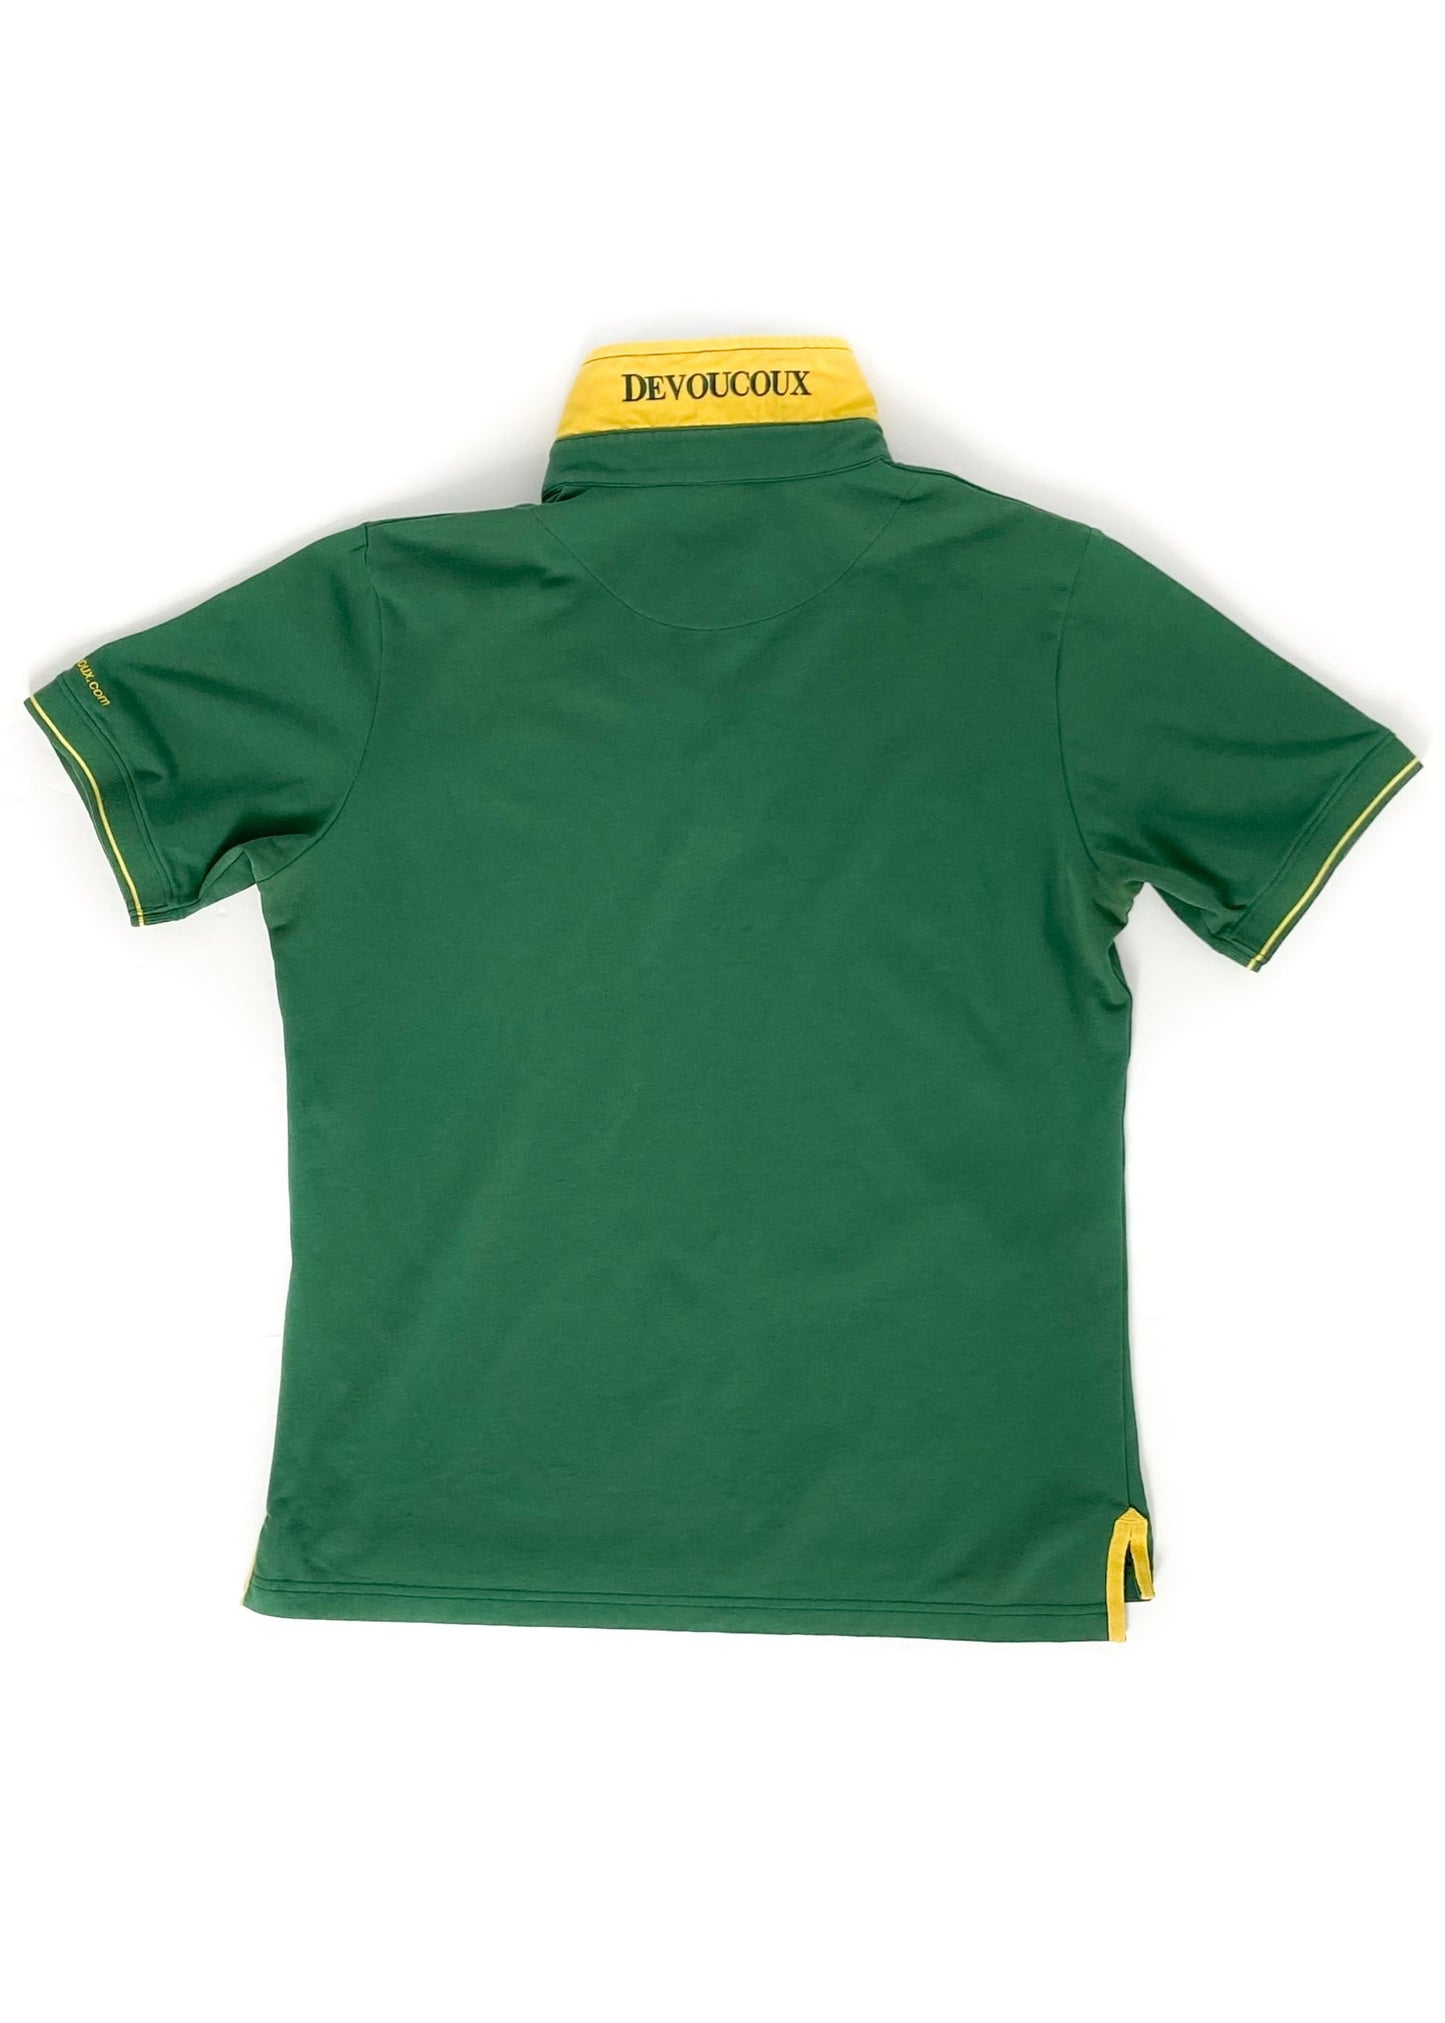 Devoucoux Polo Shirt - Green - Large